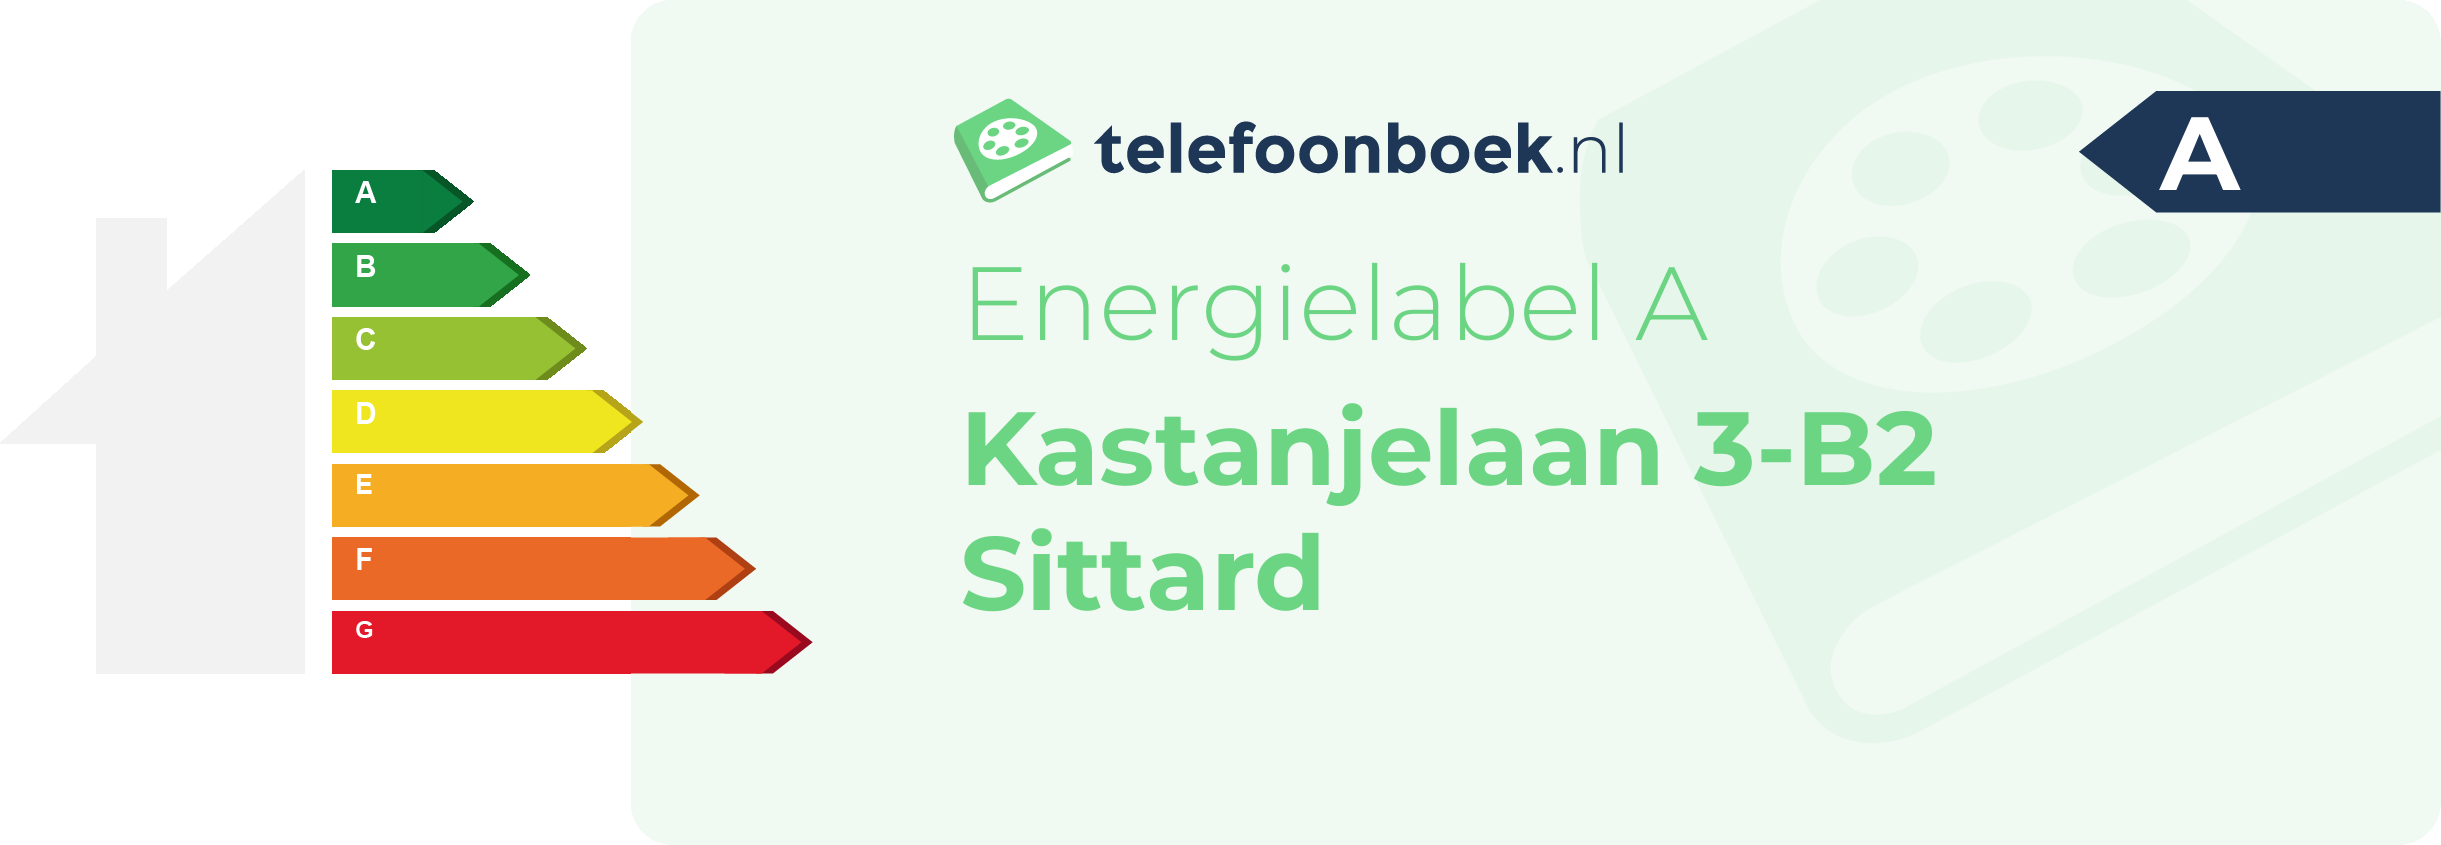 Energielabel Kastanjelaan 3-B2 Sittard